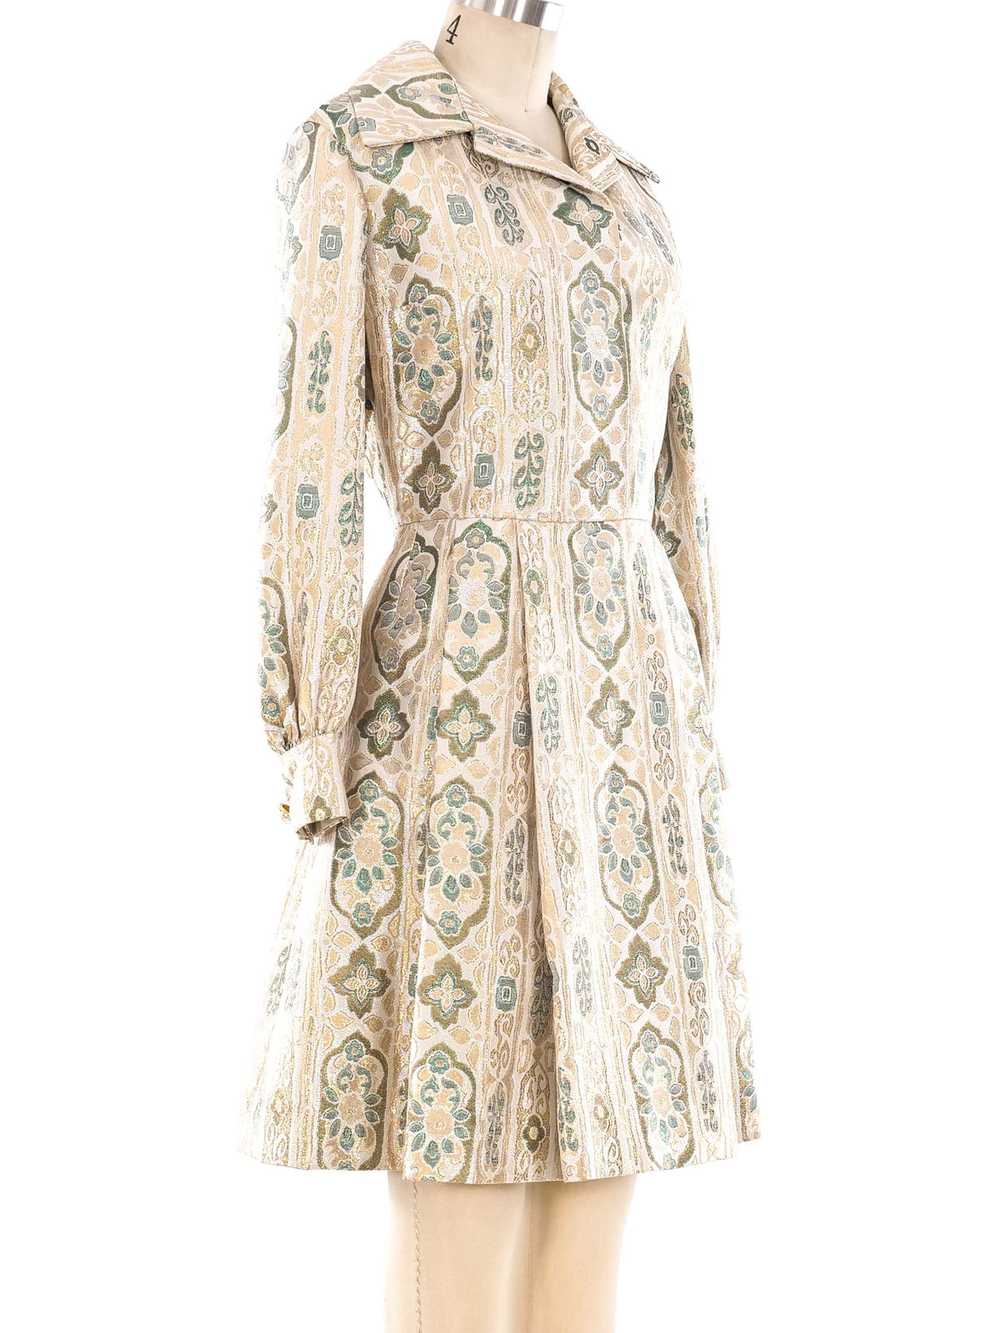 Bill Blass Metallic Brocade Dress - image 2